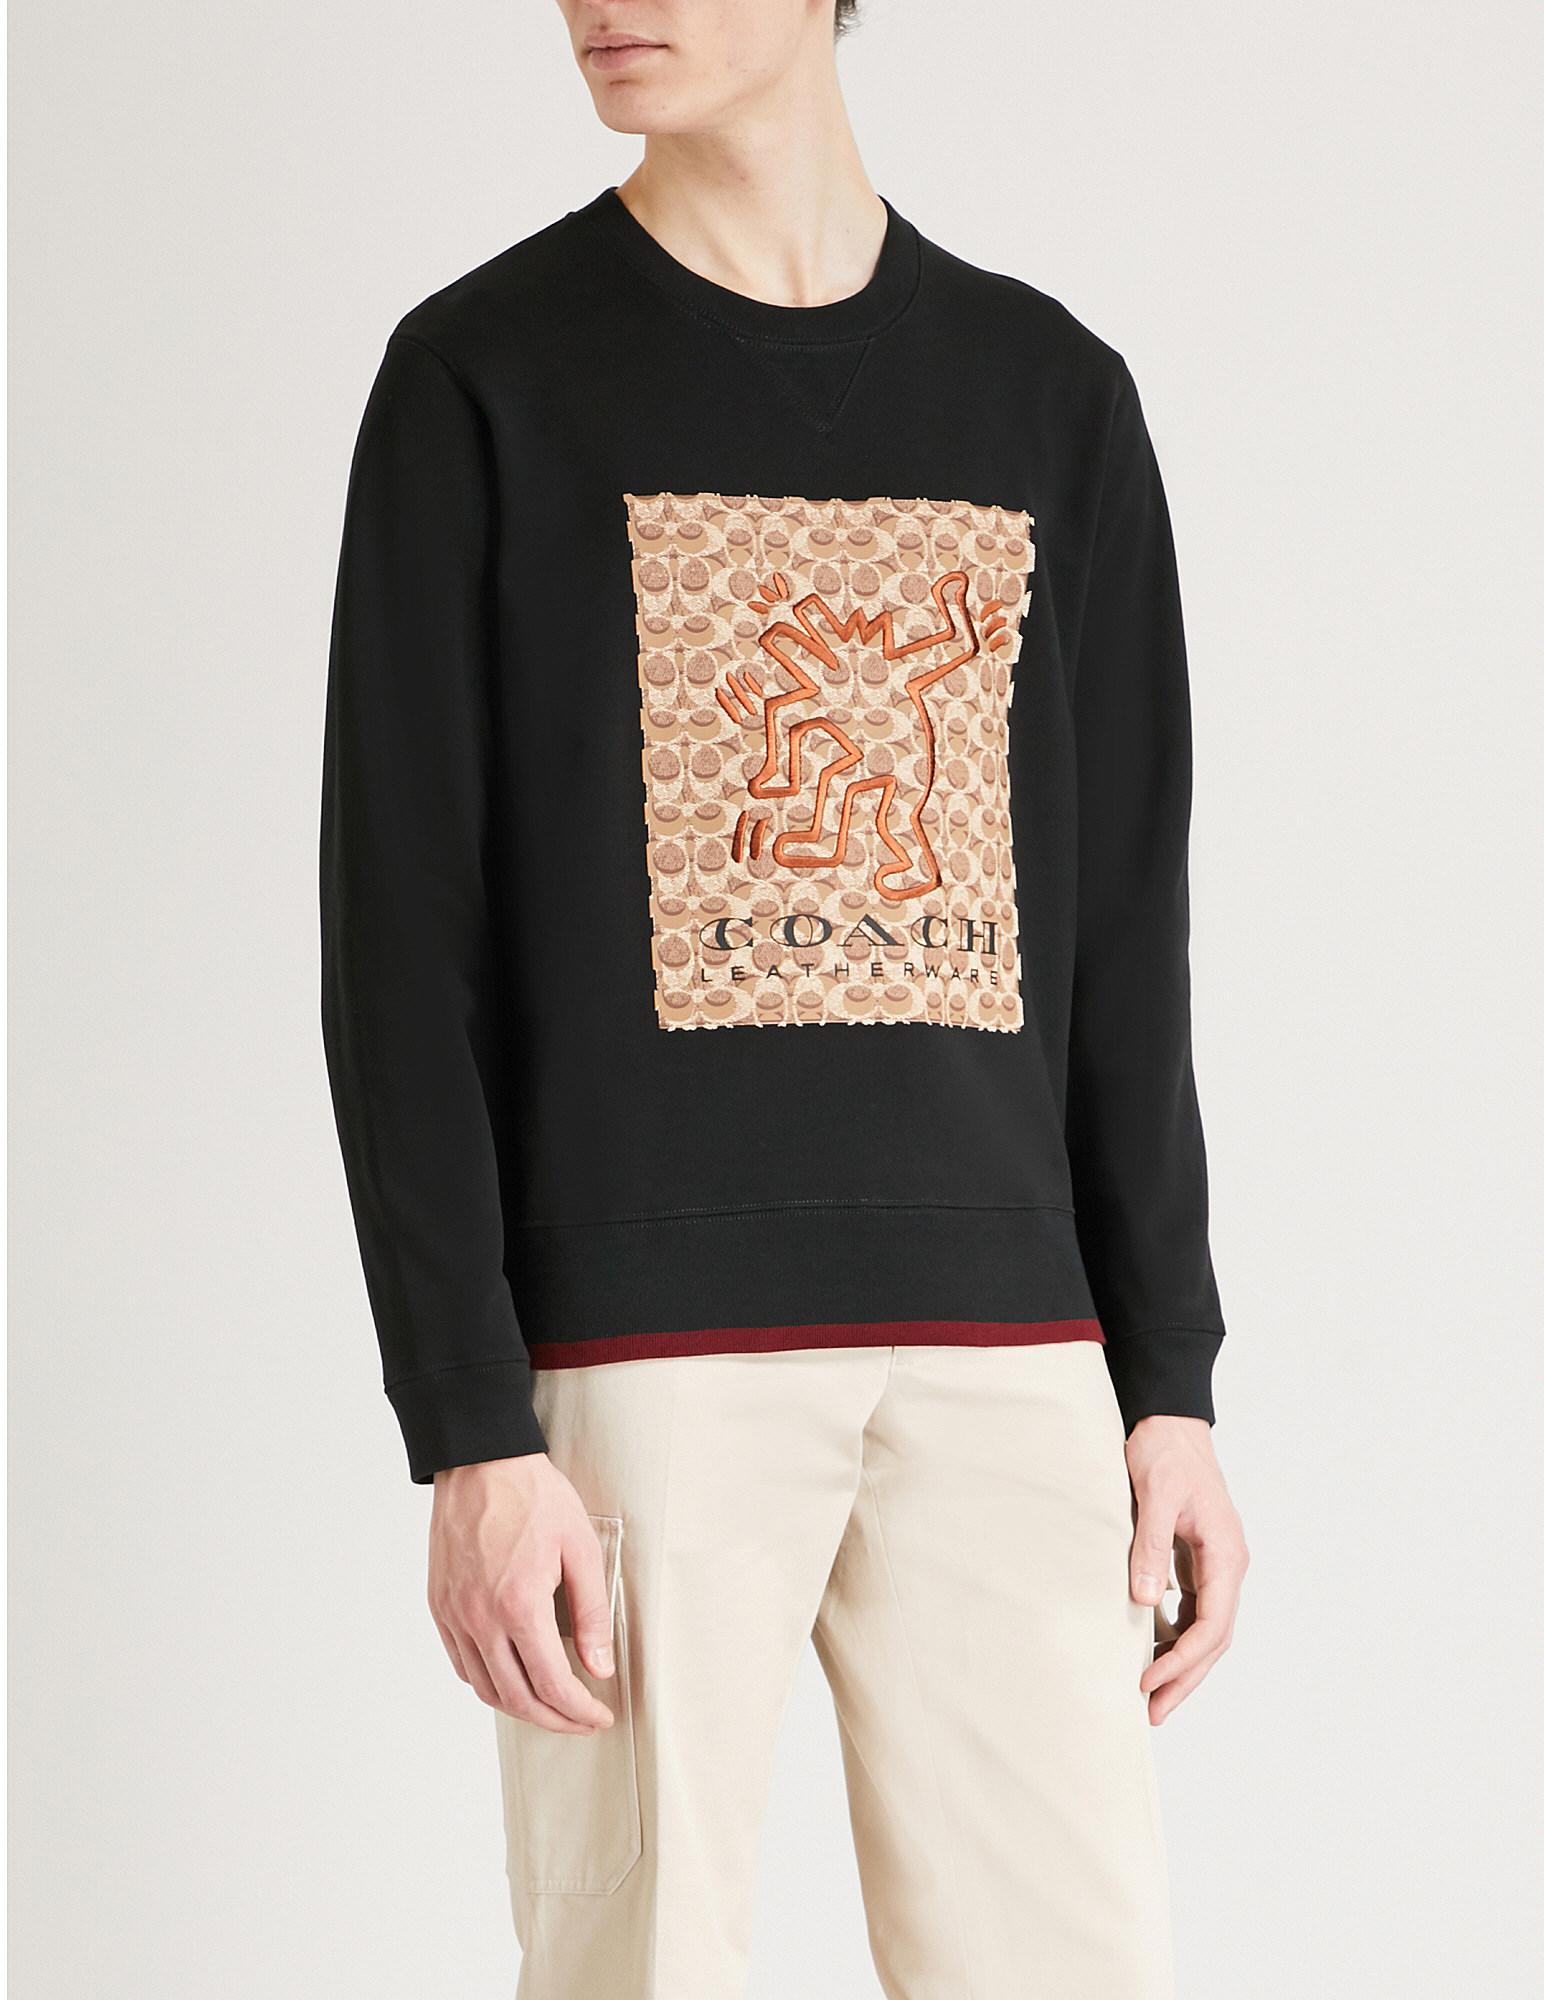 COACH Coach X Keith Haring Cotton Sweatshirt in Black for Men | Lyst